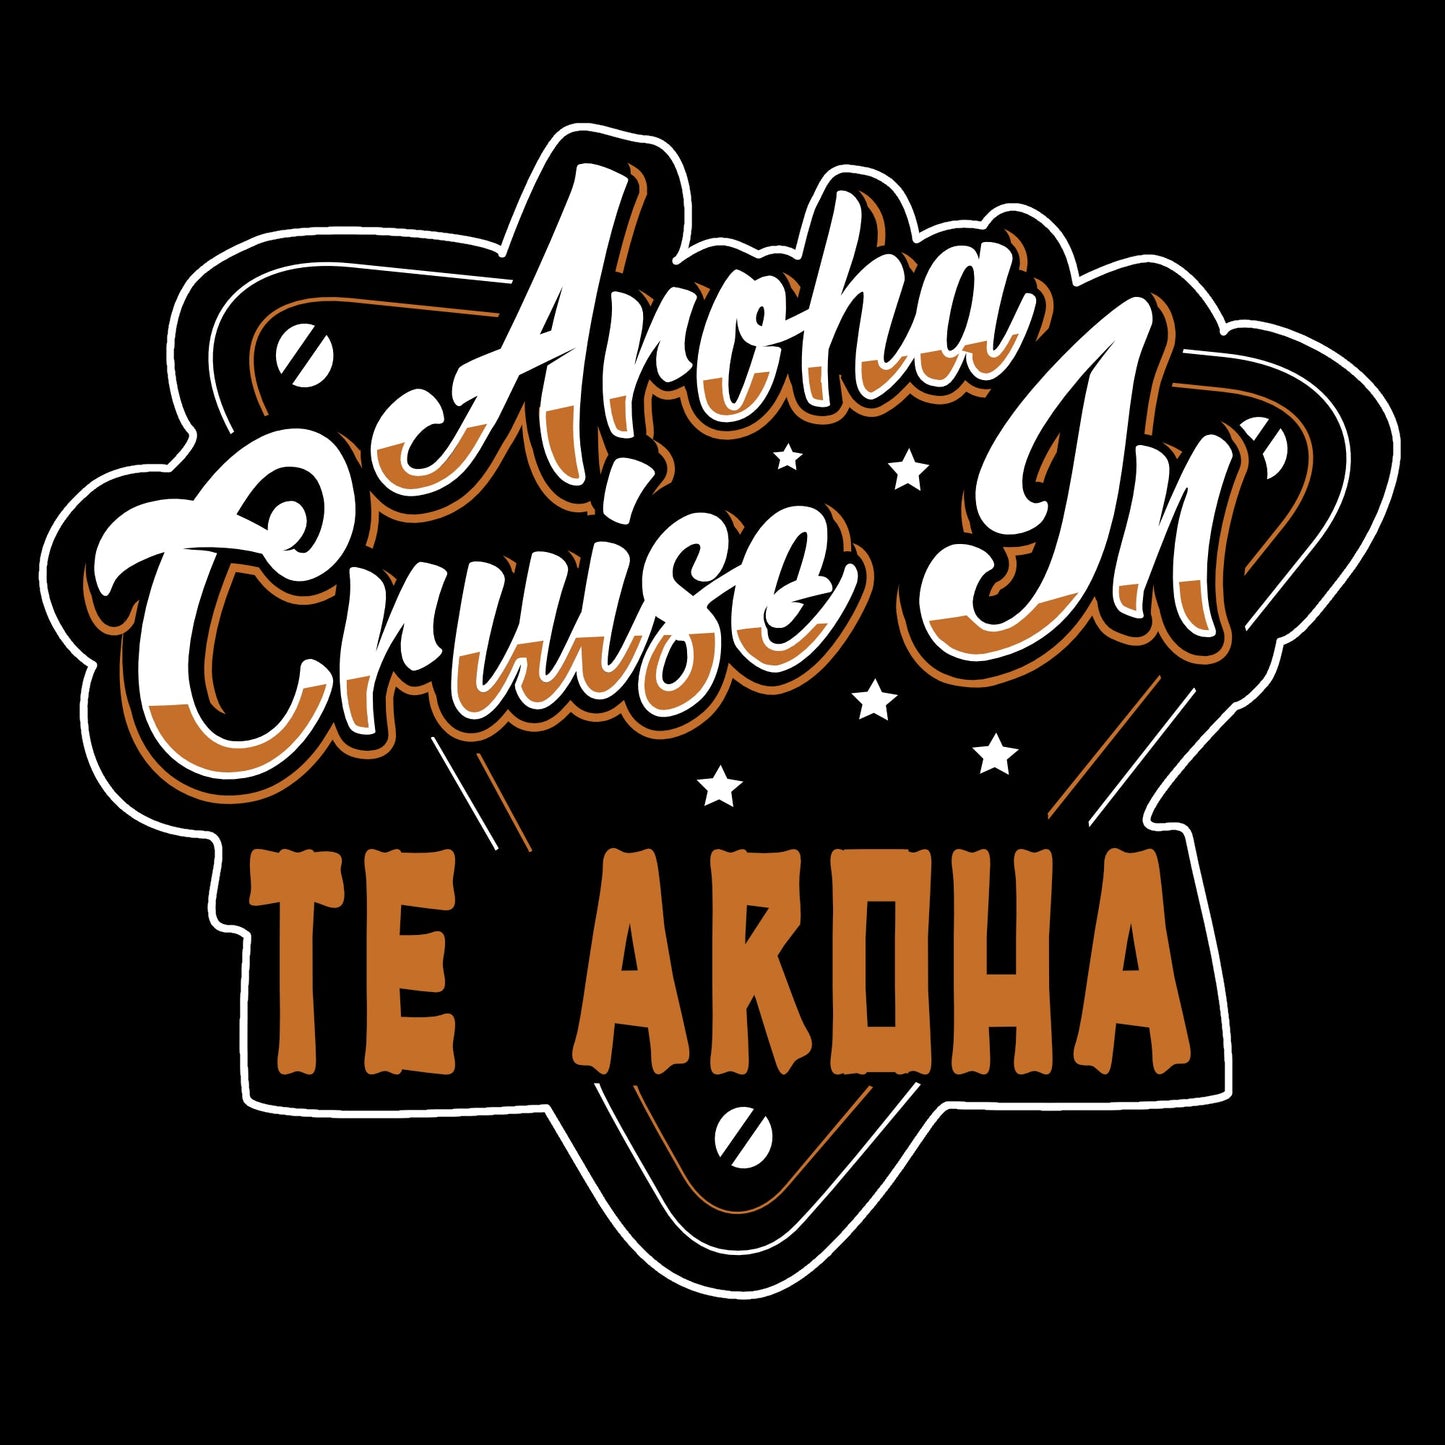 Aroha Cruise In Chev Belair